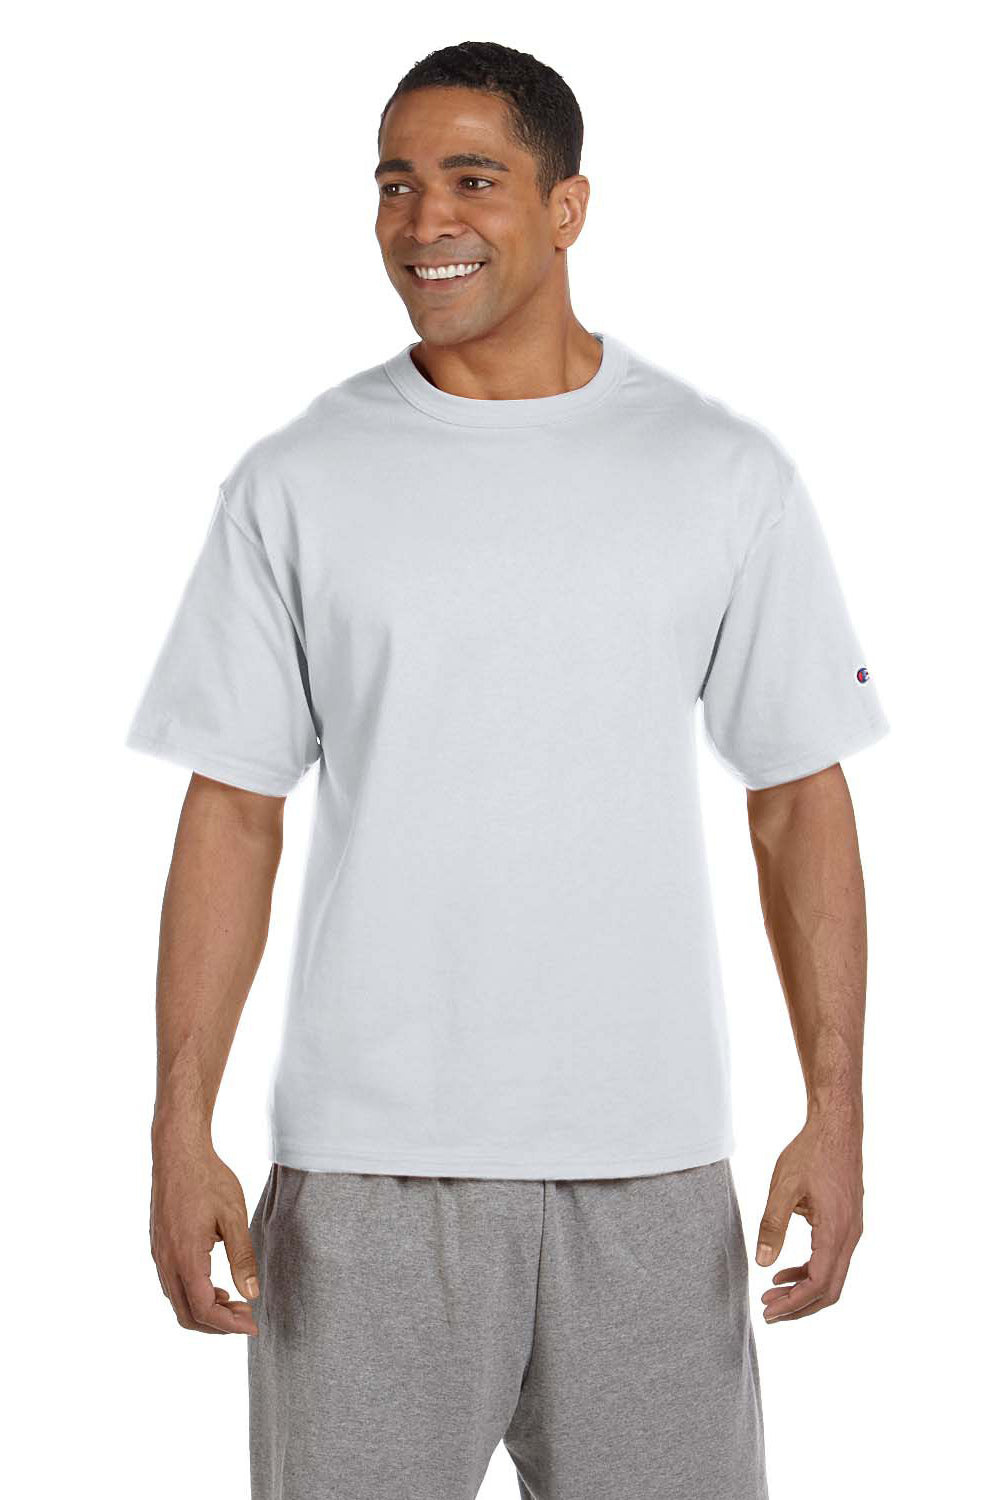 Champion T2102 Mens Heritage Short Sleeve Crewneck T-Shirt Silver Grey Front